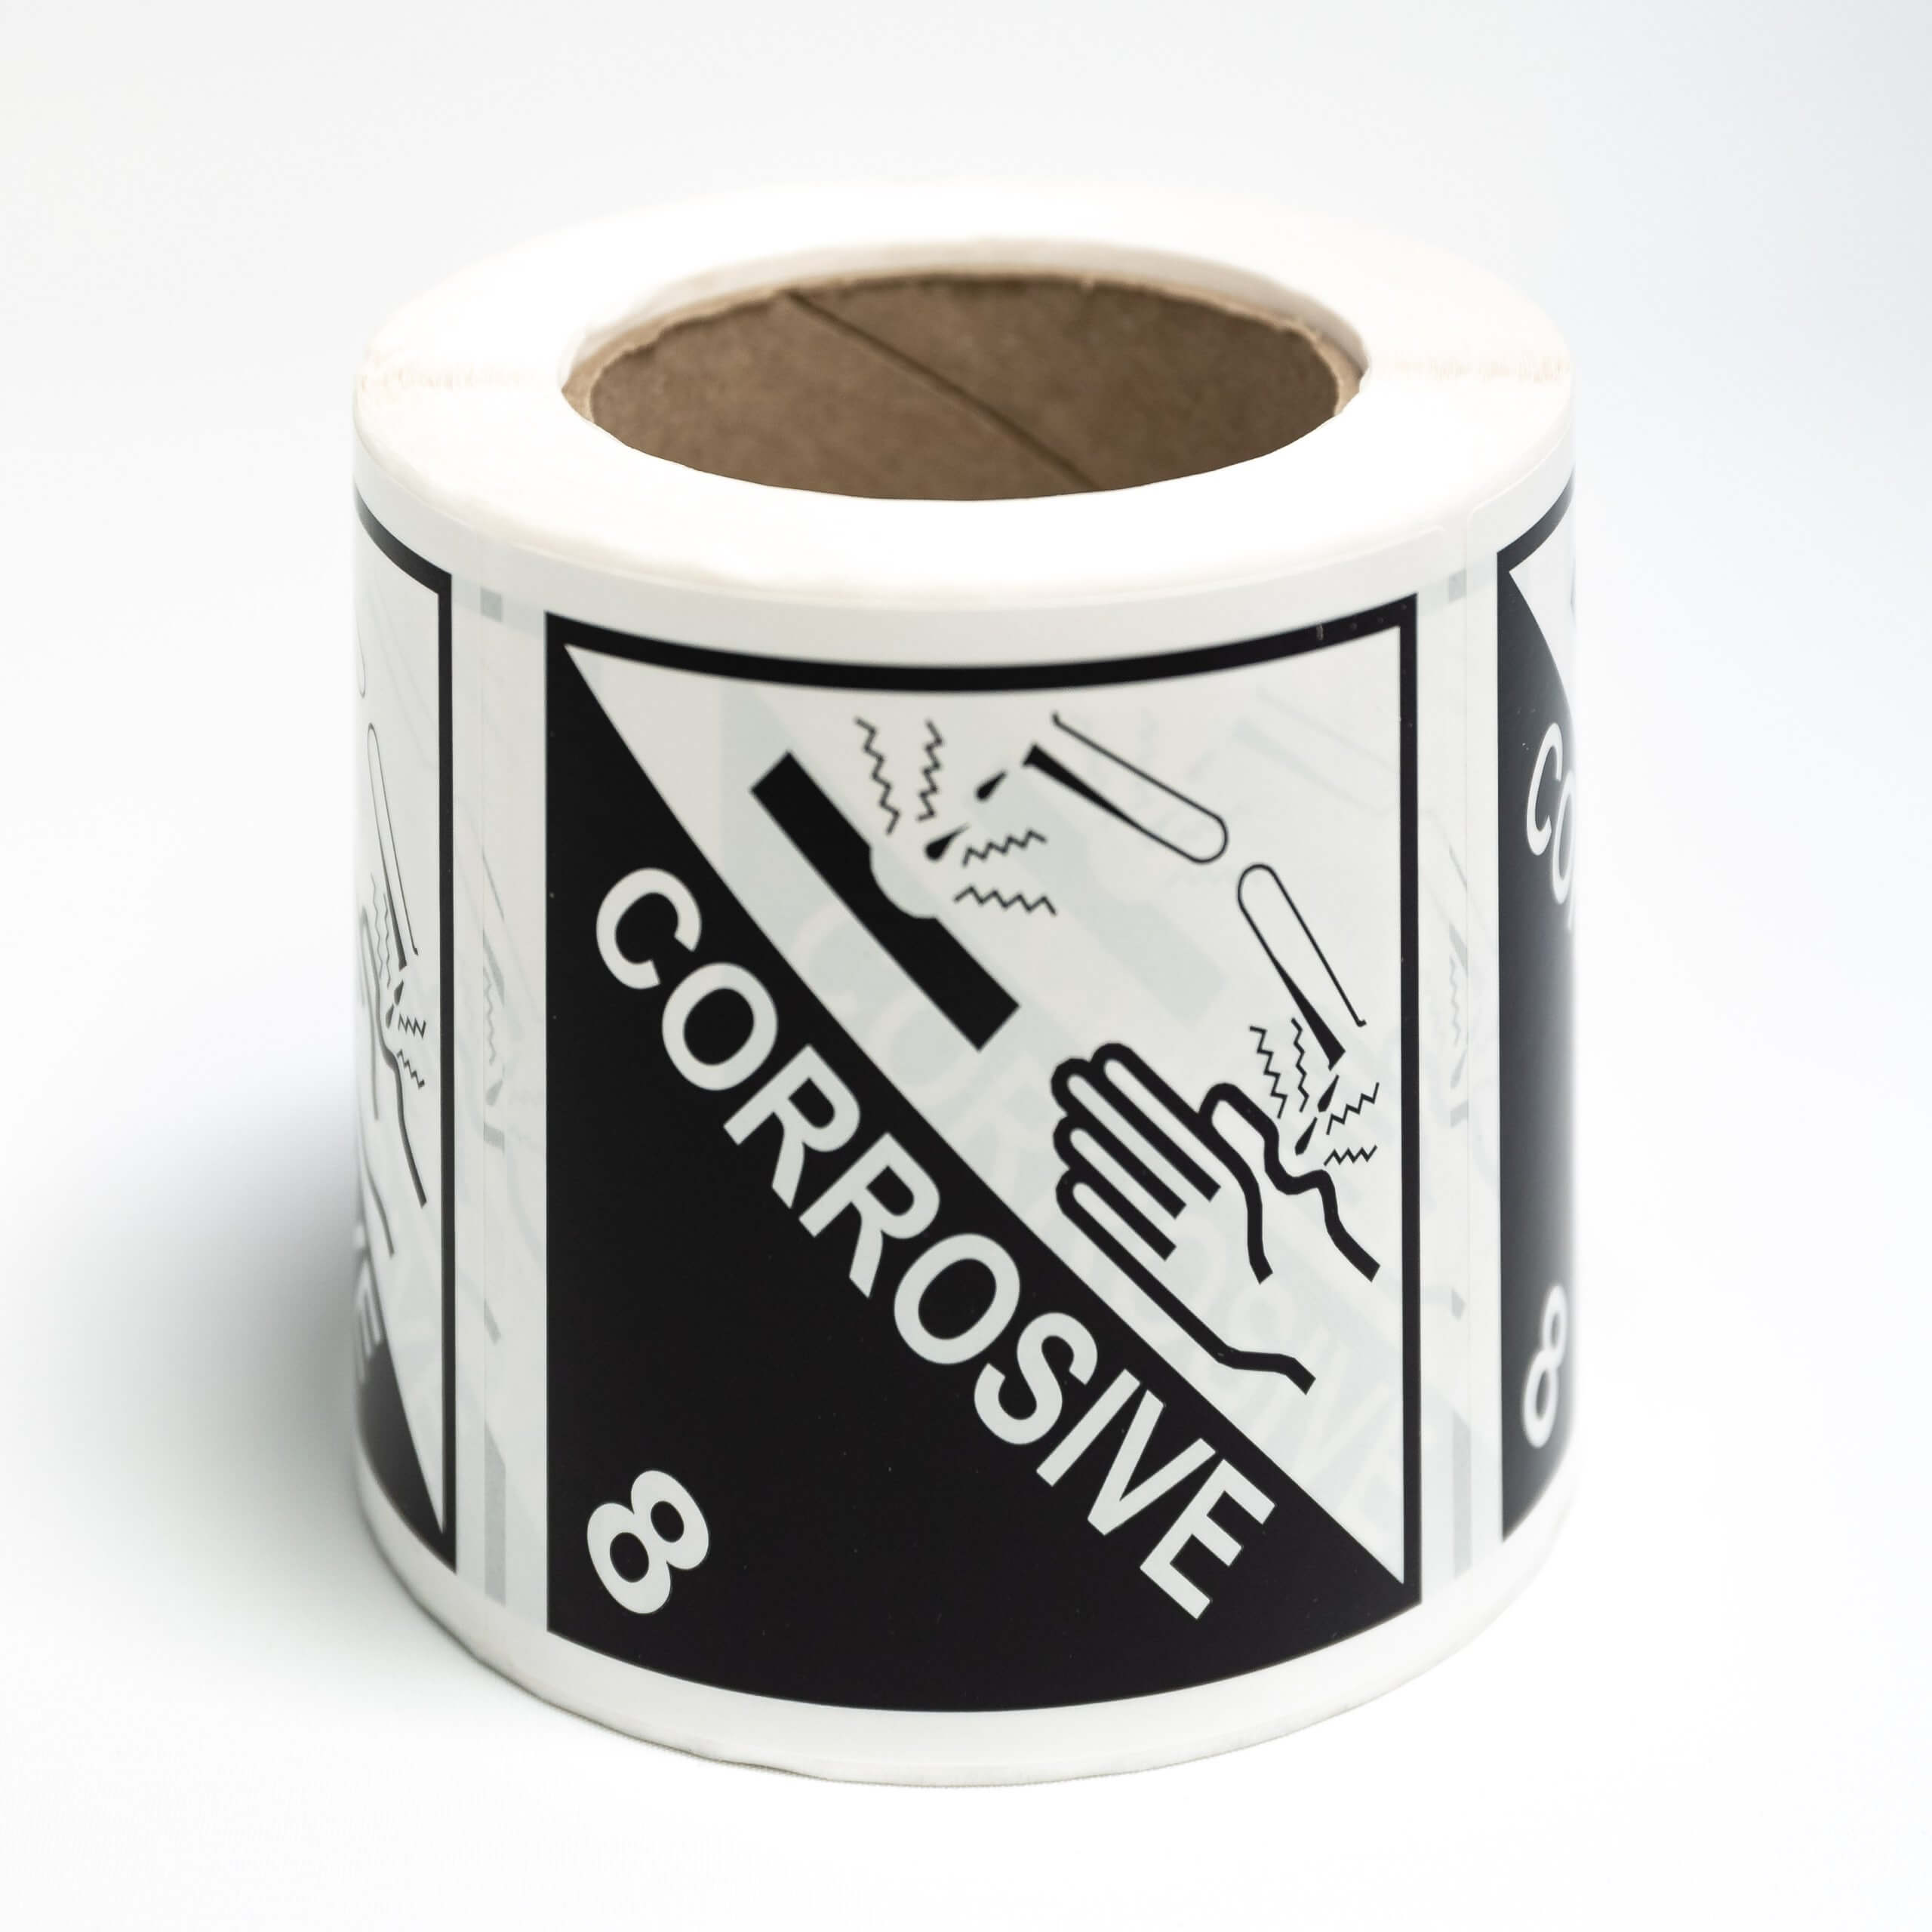 Class 8 Corrosive Labels Marair